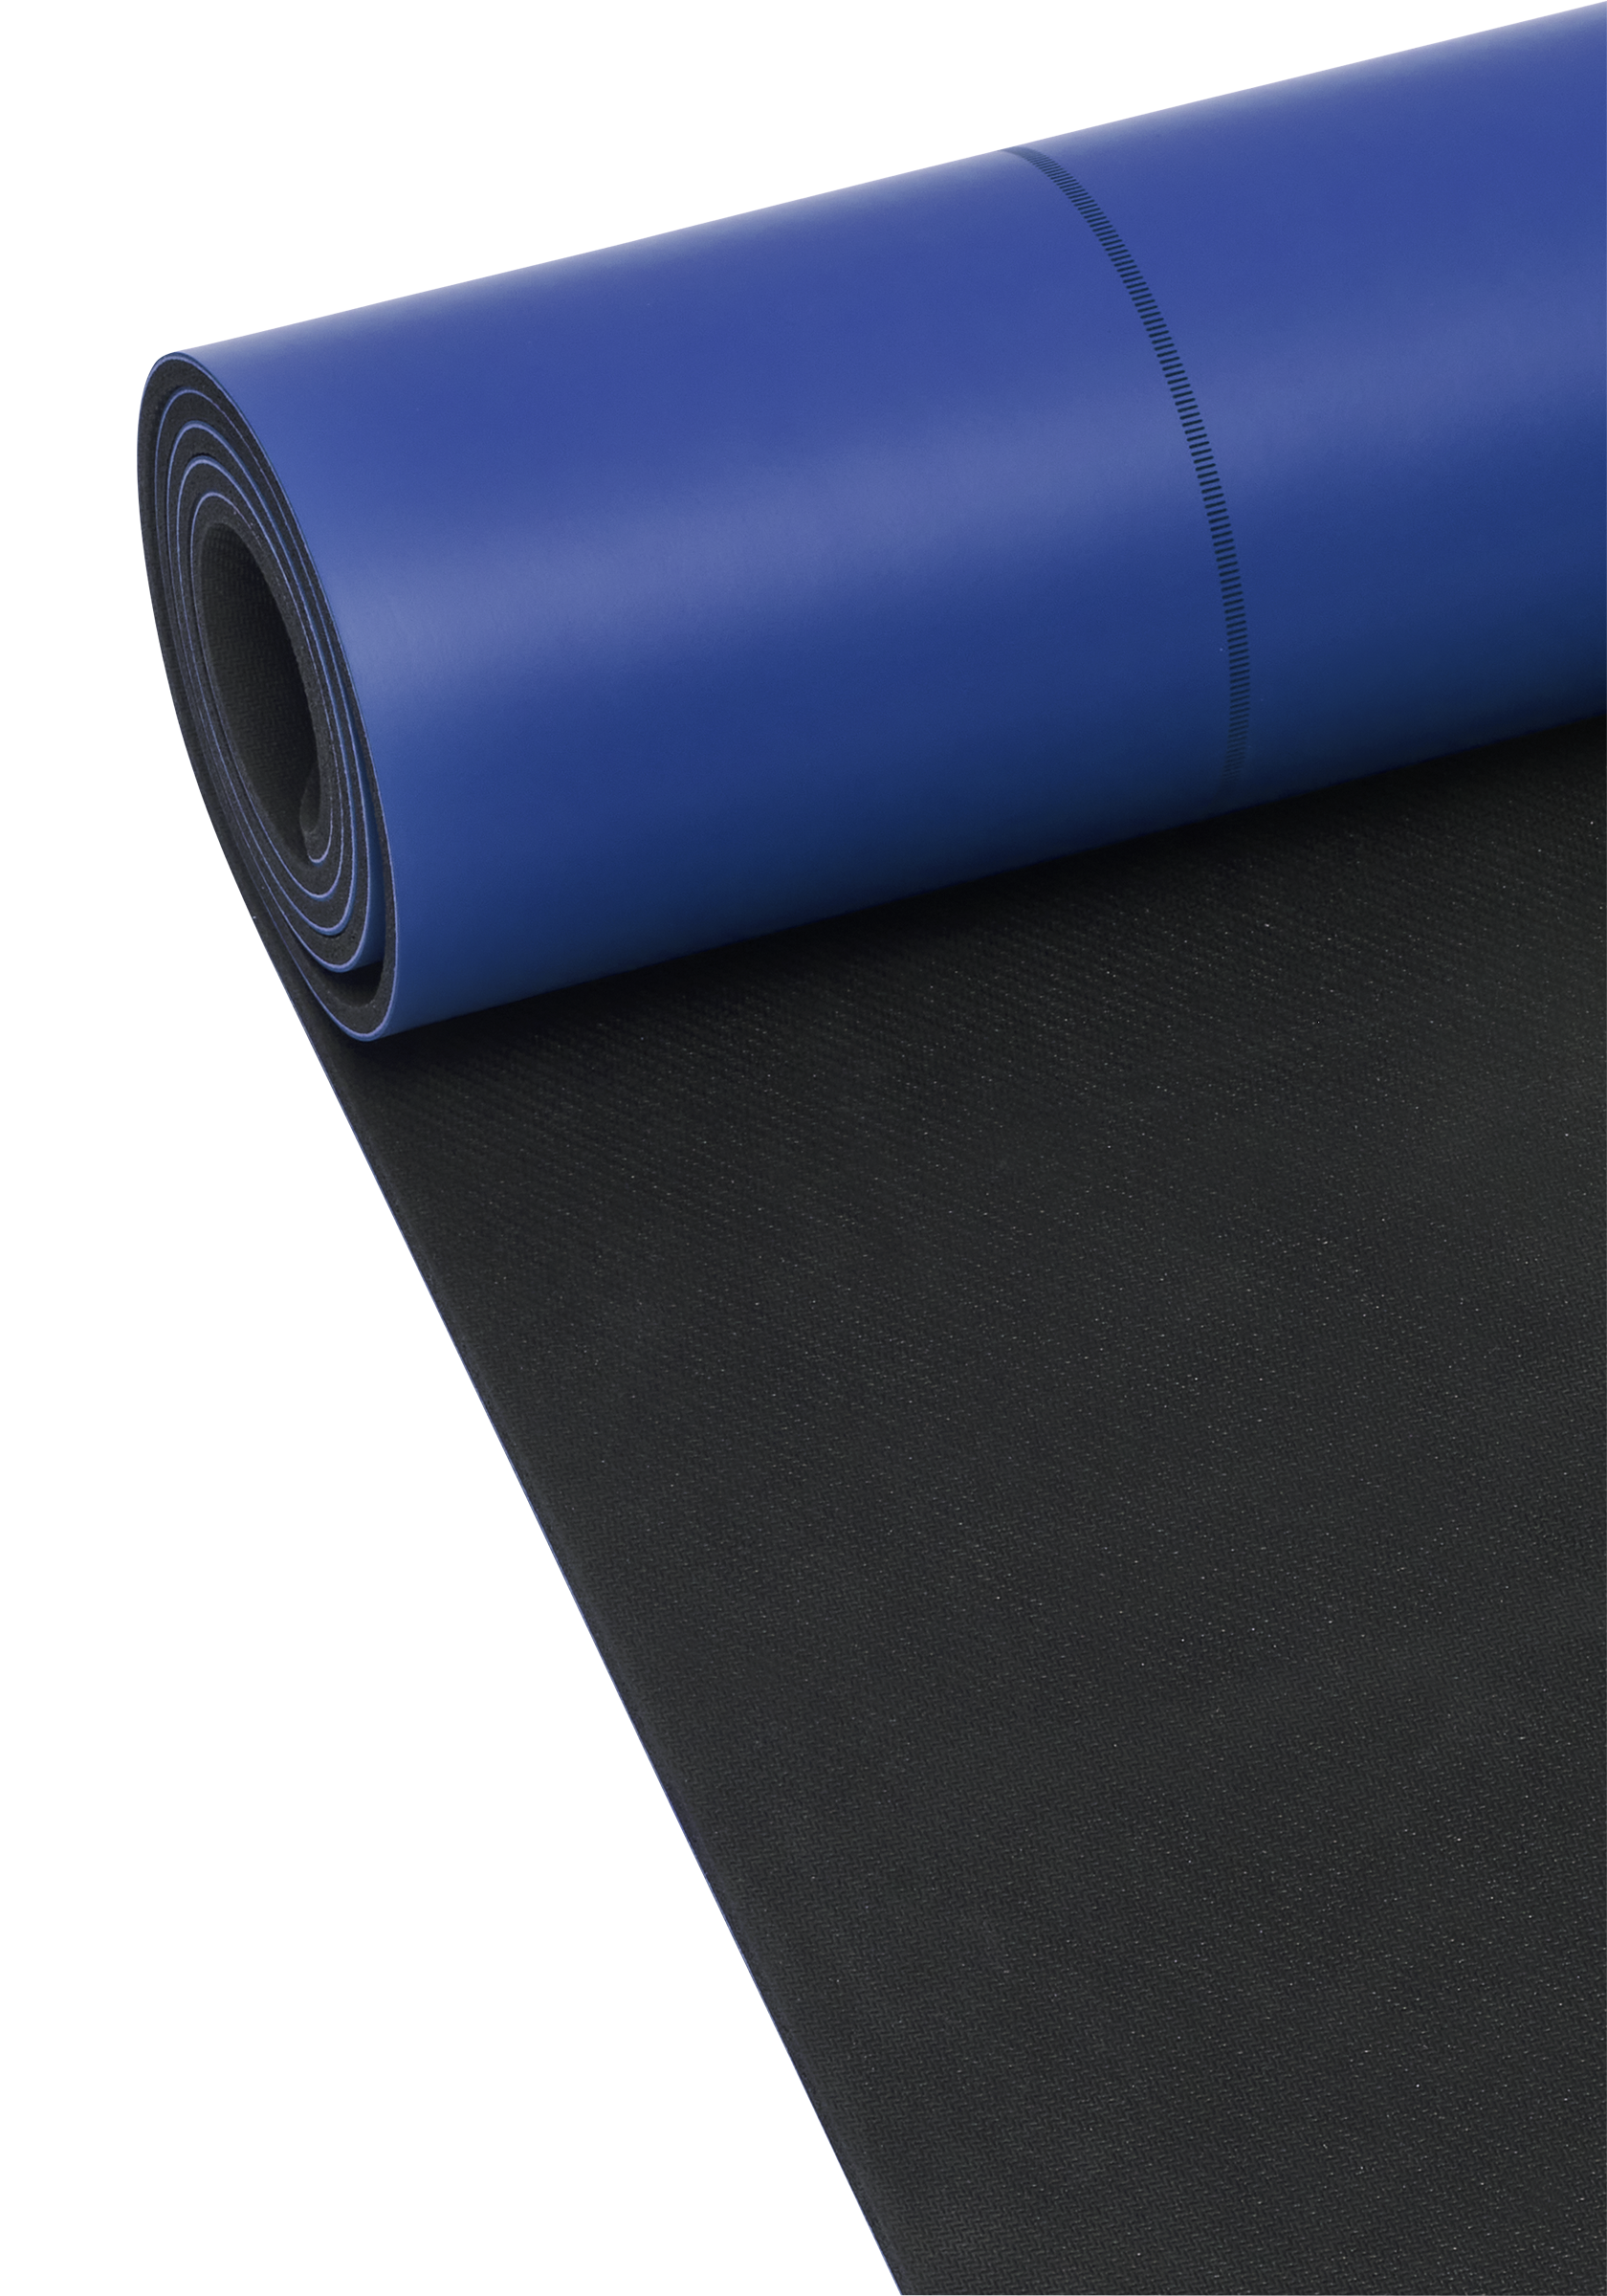 Casall Yoga Mat Grip & Cushion II - 5 mm Black/Tropical Blue o/s :  : Sports & Outdoors